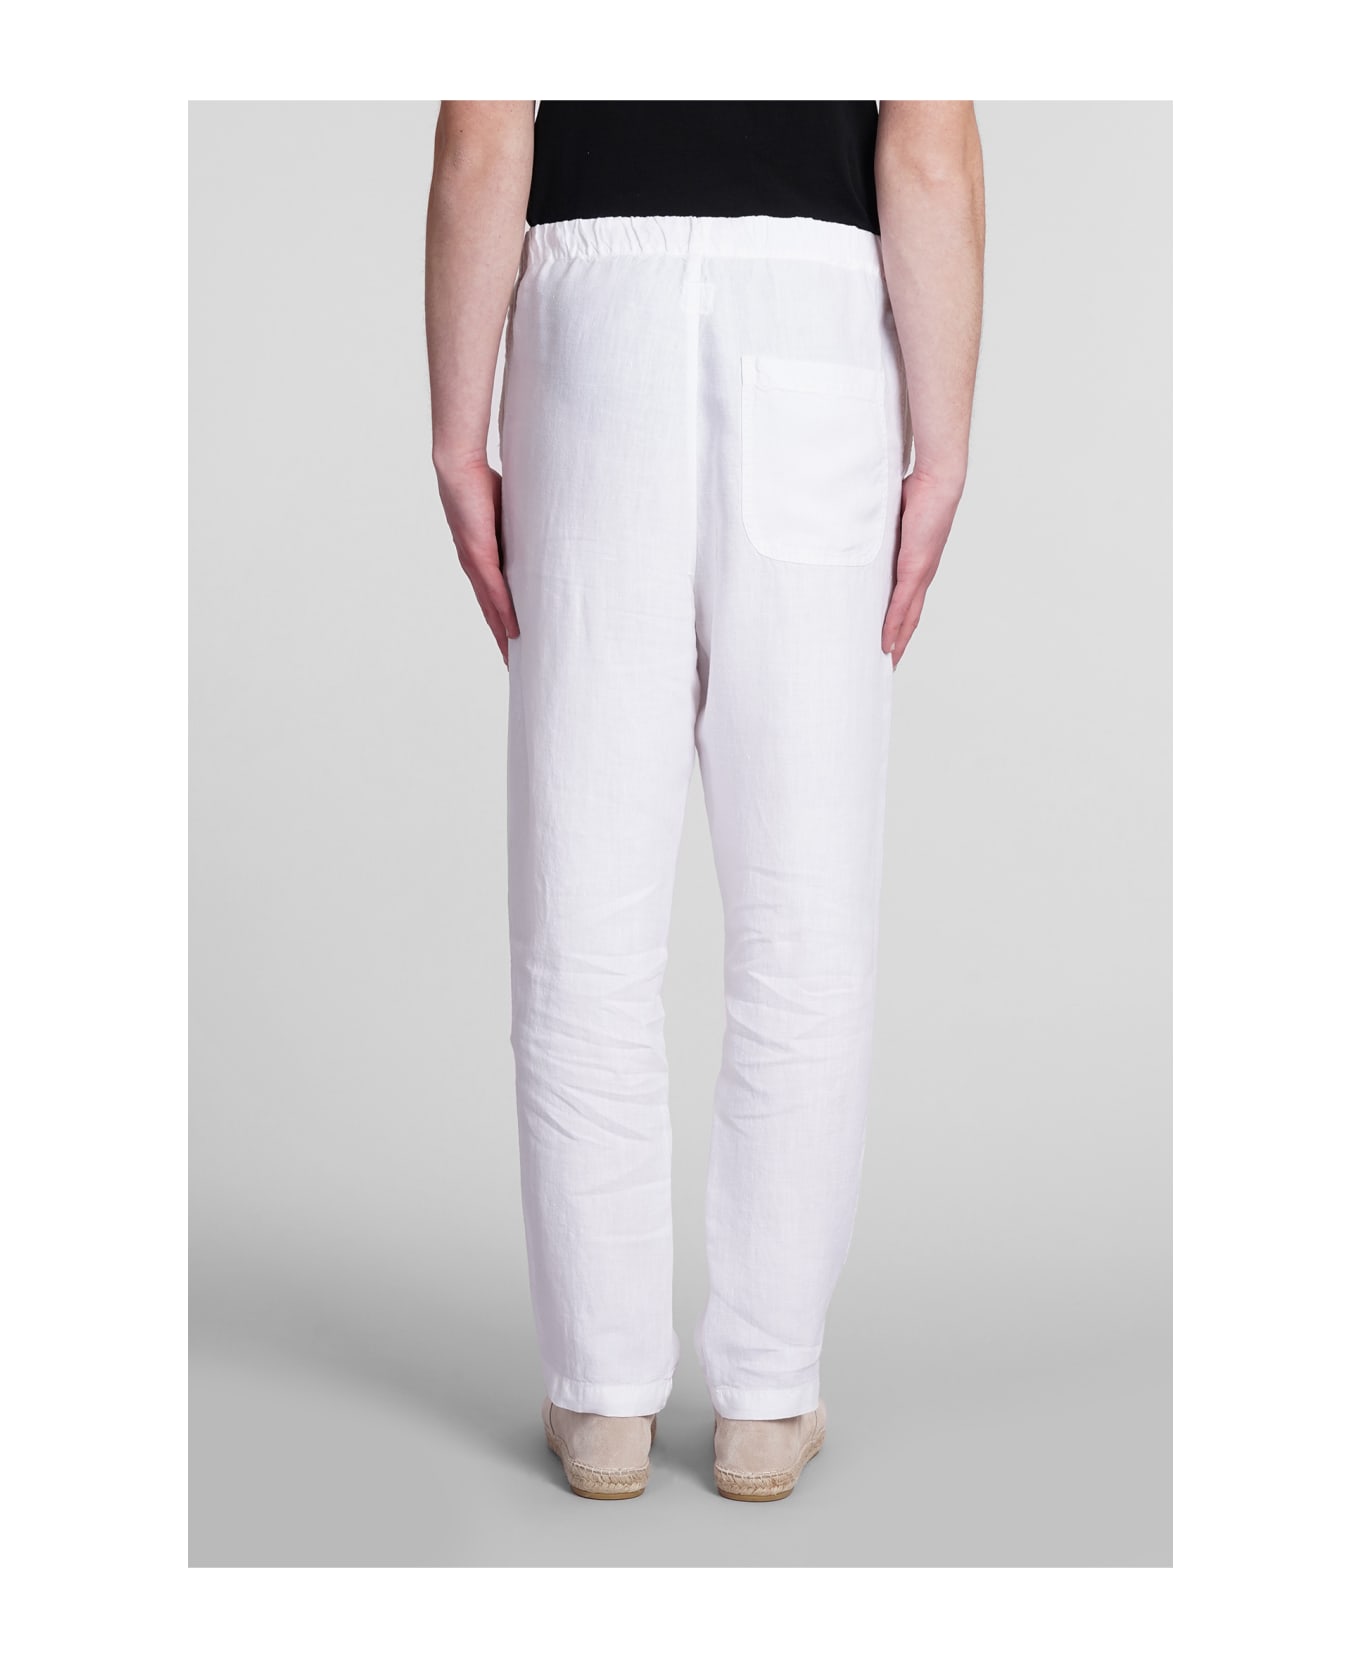 120% Lino Pants In White Linen - white ボトムス